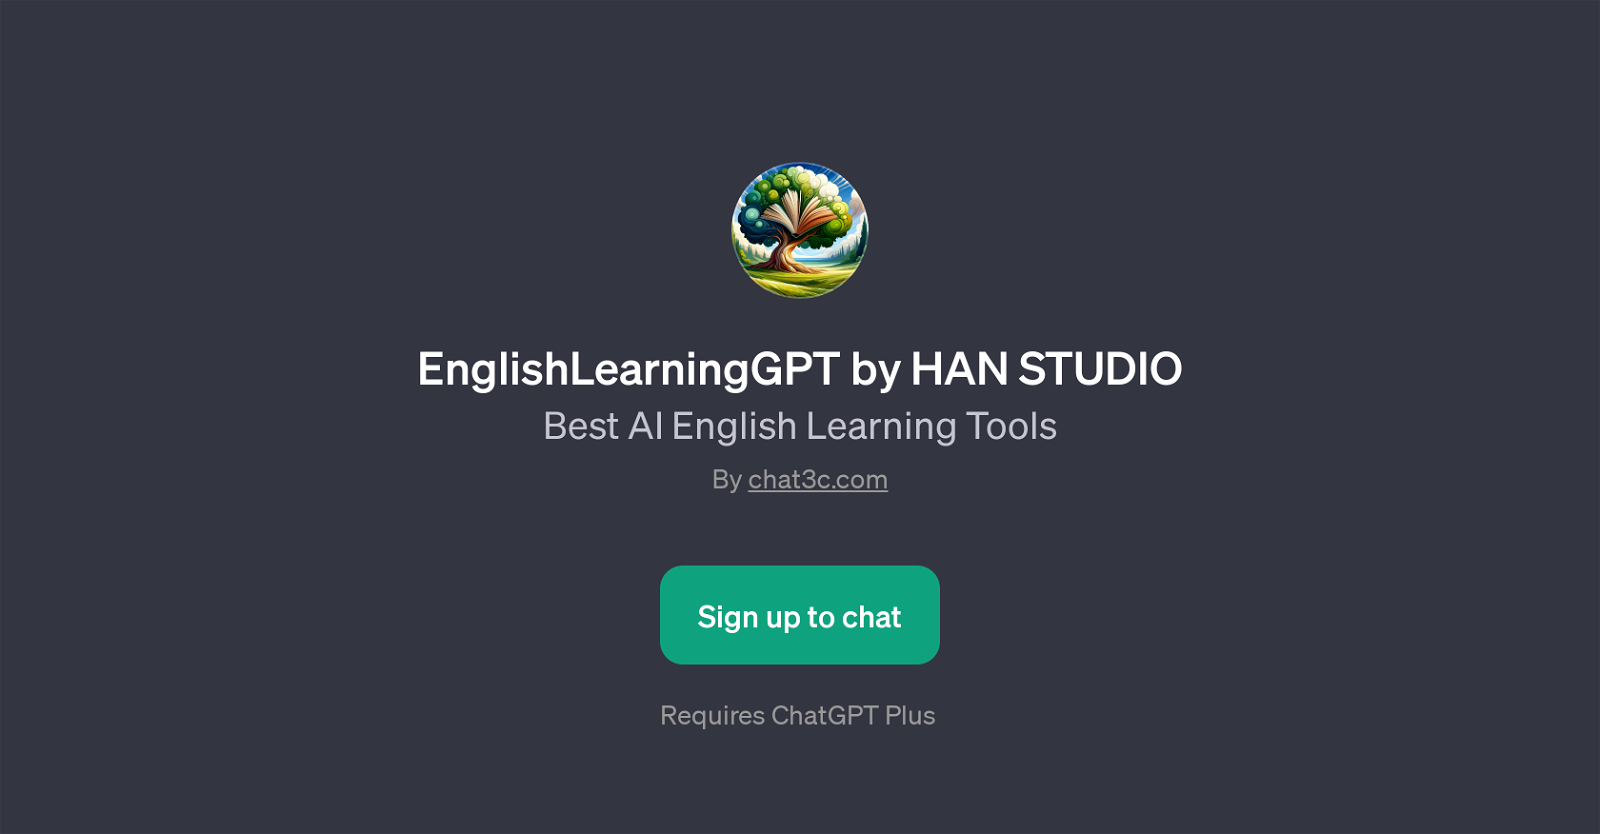 EnglishLearningGPT by HAN STUDIO website